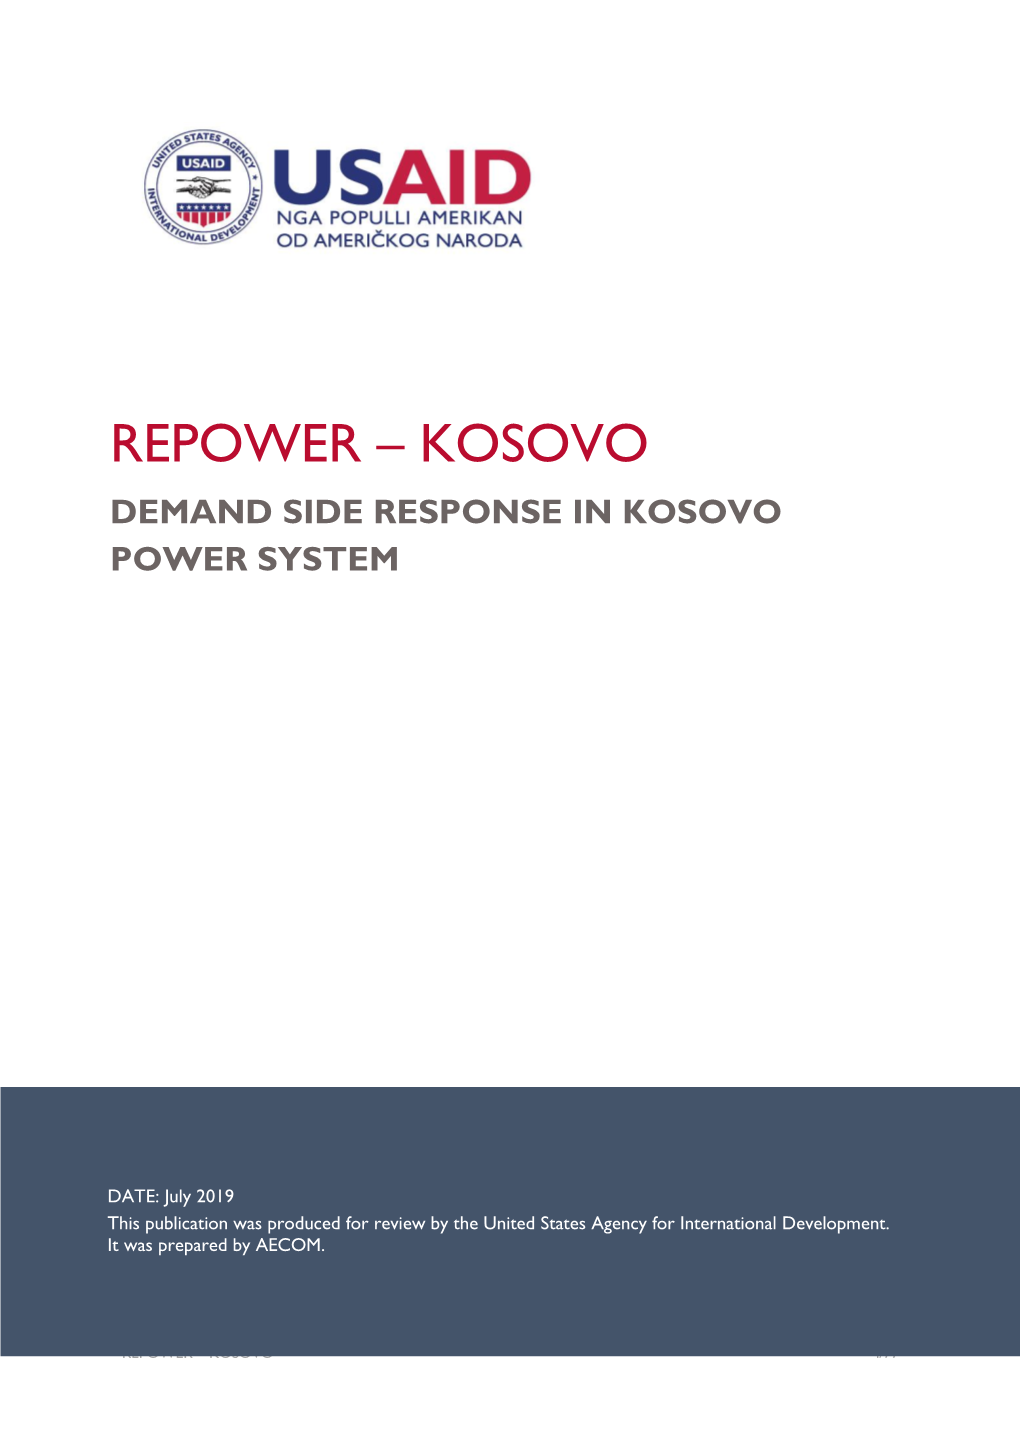 Repower – Kosovo Demand Side Response in Kosovo Power System